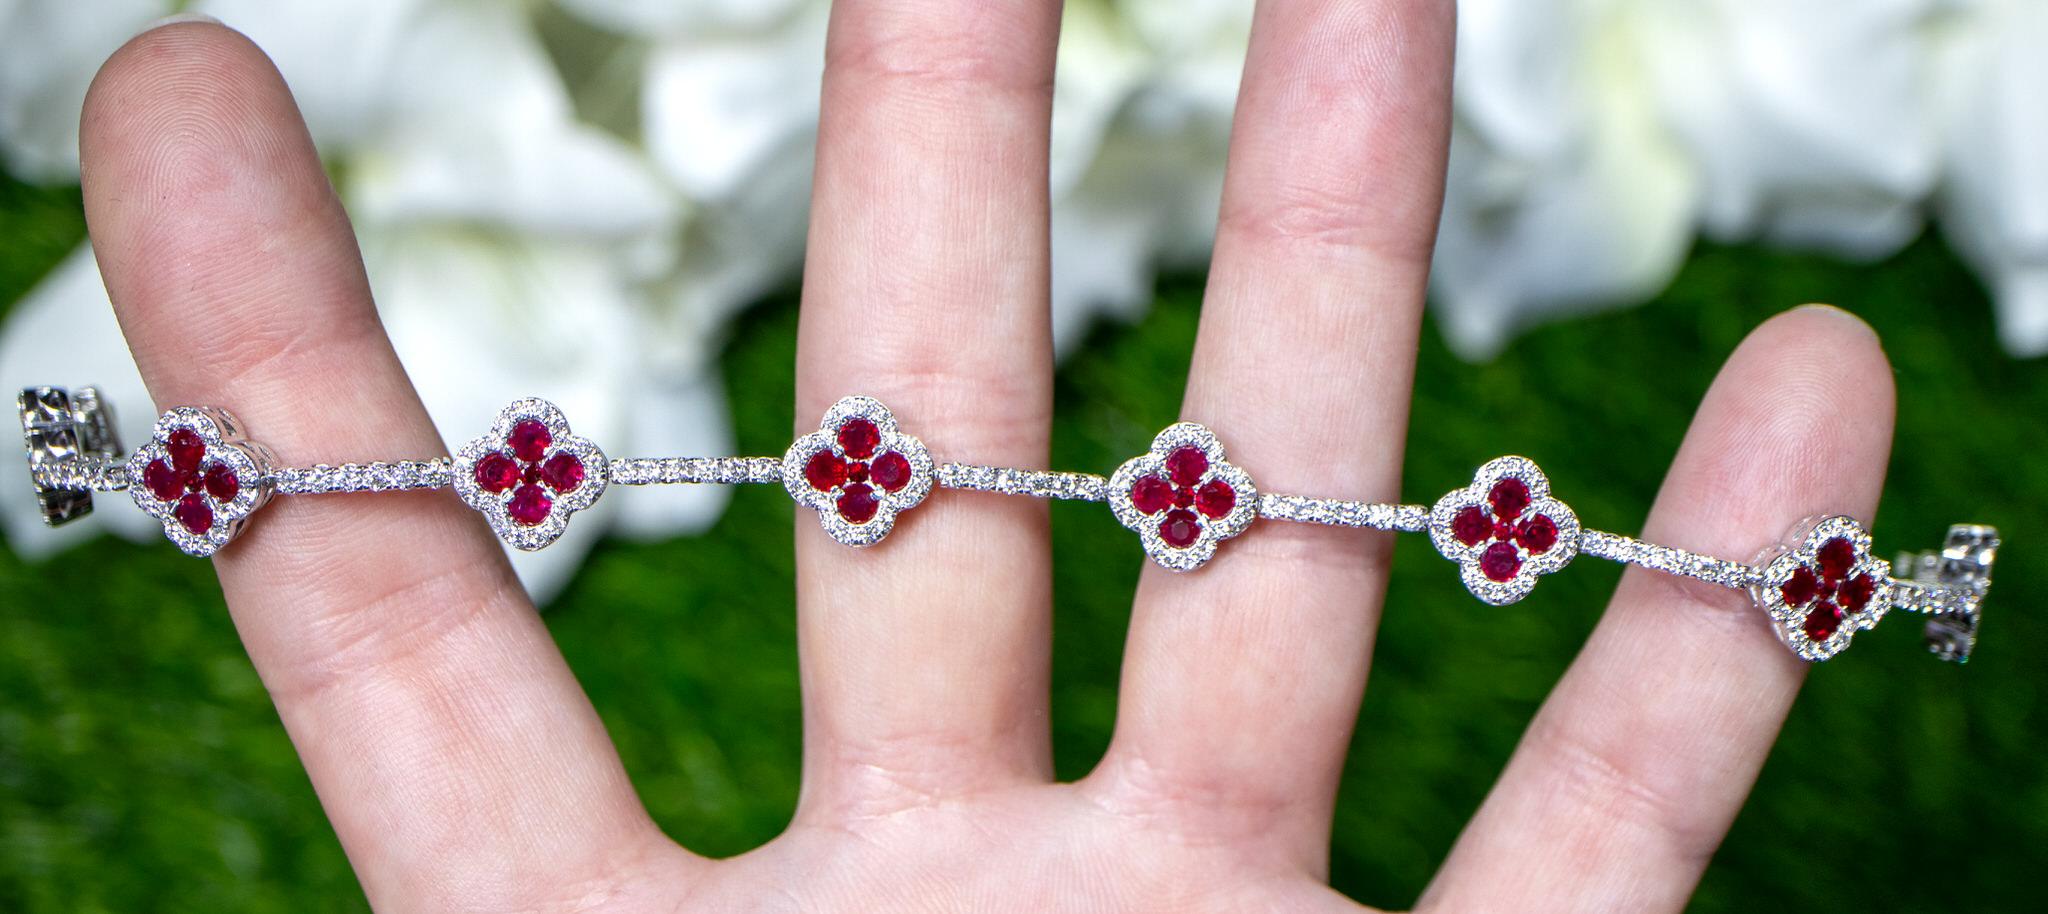 Modern Clover Ruby Bracelet Diamond Links 6.47 Carats 18K White Gold For Sale